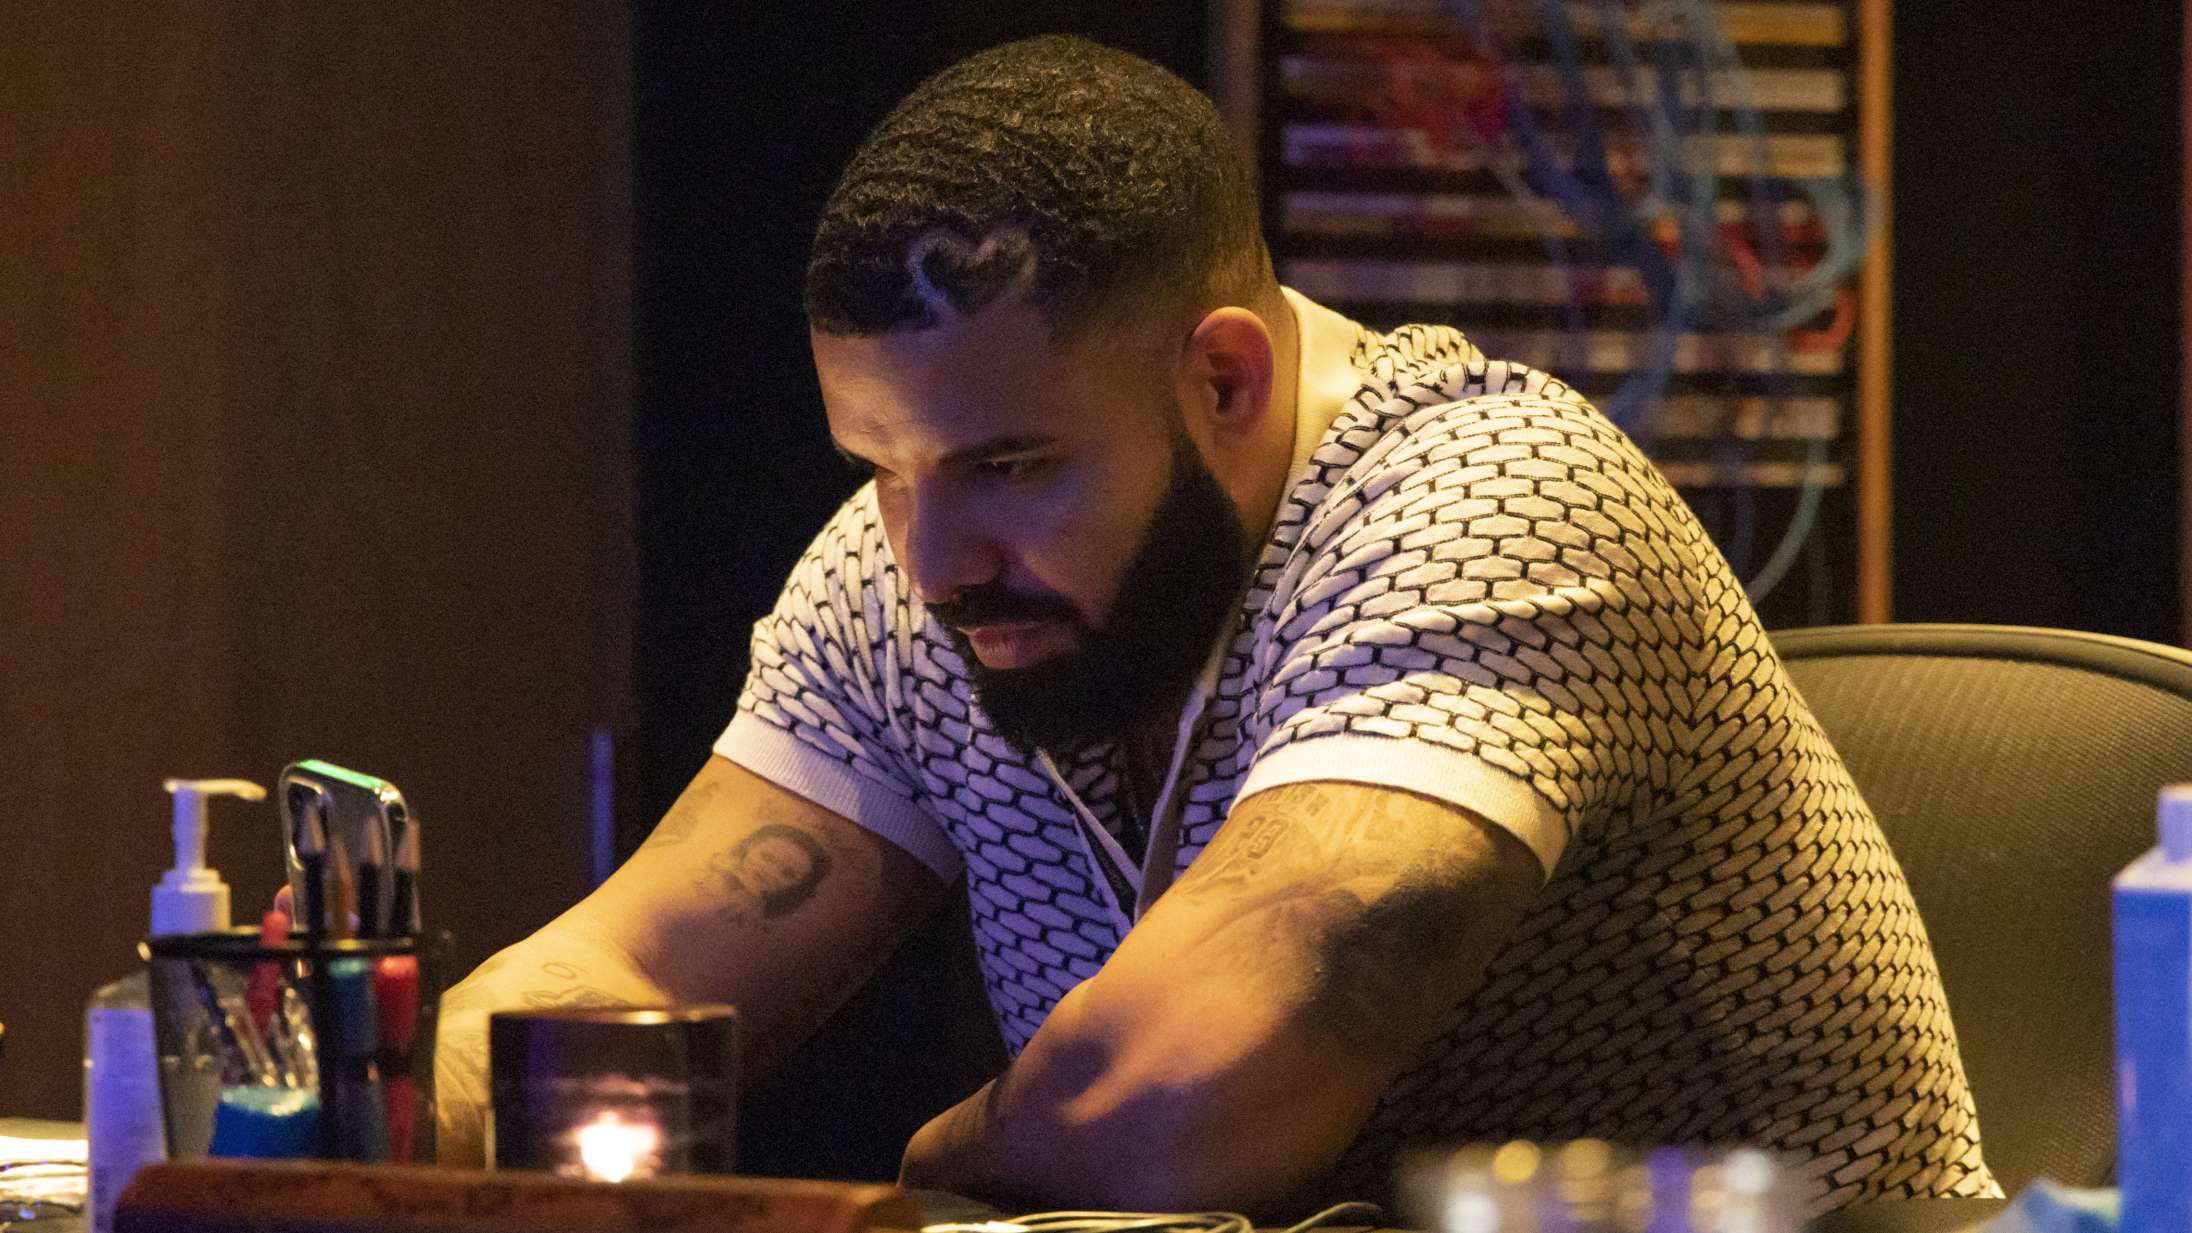 Drakes nye album sampler The Beatles og har R. Kelly krediteret som sangskriver